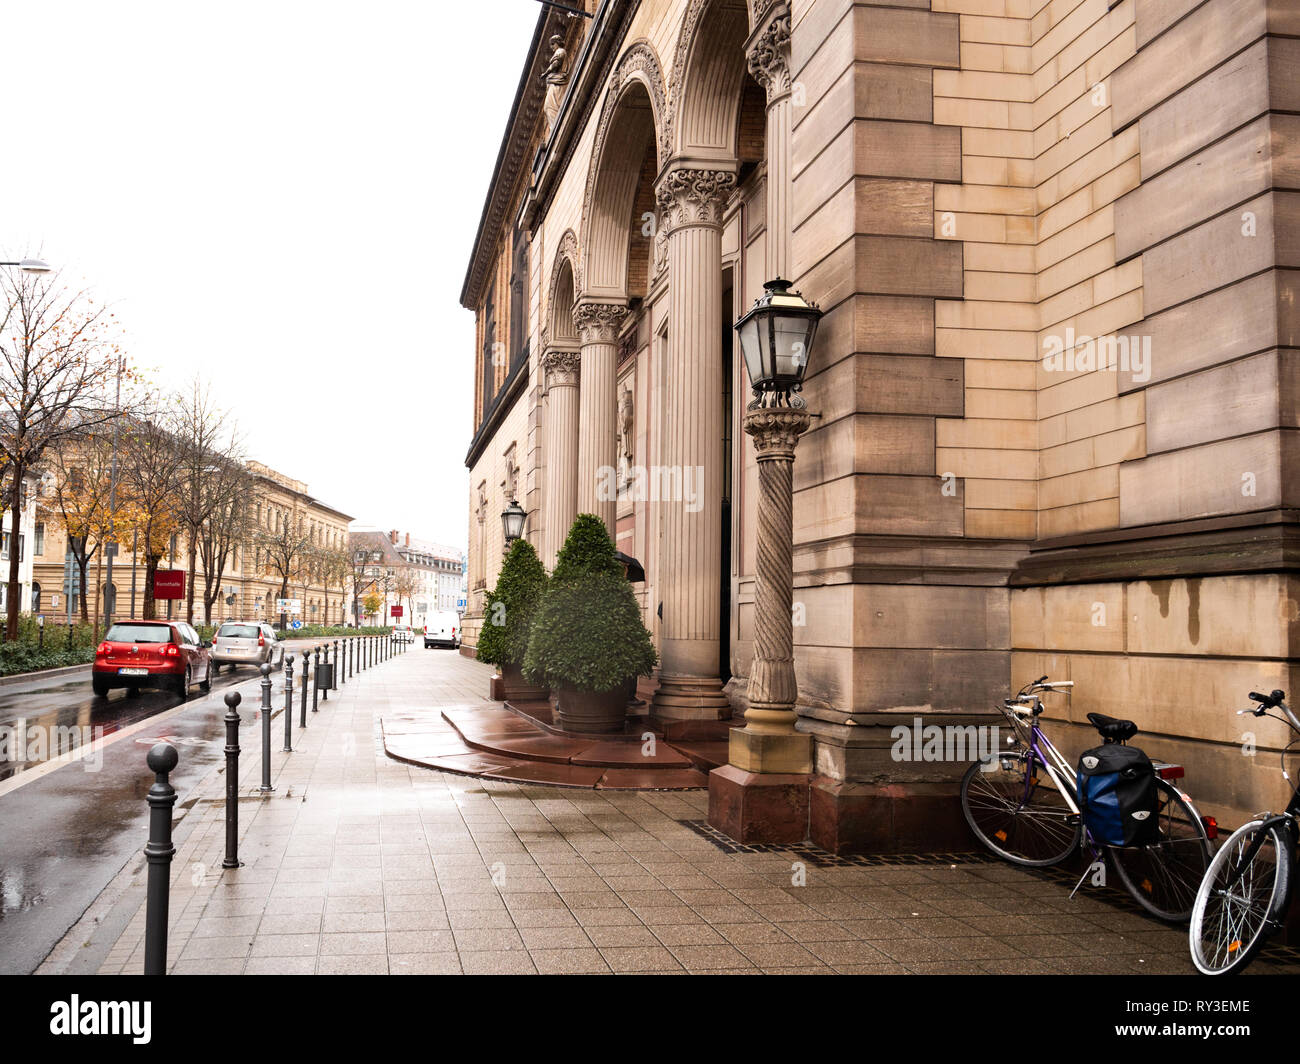 Karlsruhe, Alemania - Oct 29, 2017: Vista lateral de la Staatliche Kunsthalle Karlsruhe State Art Gallery aprovechando Hans-Thoma-Strasse street en un día lluvioso Foto de stock